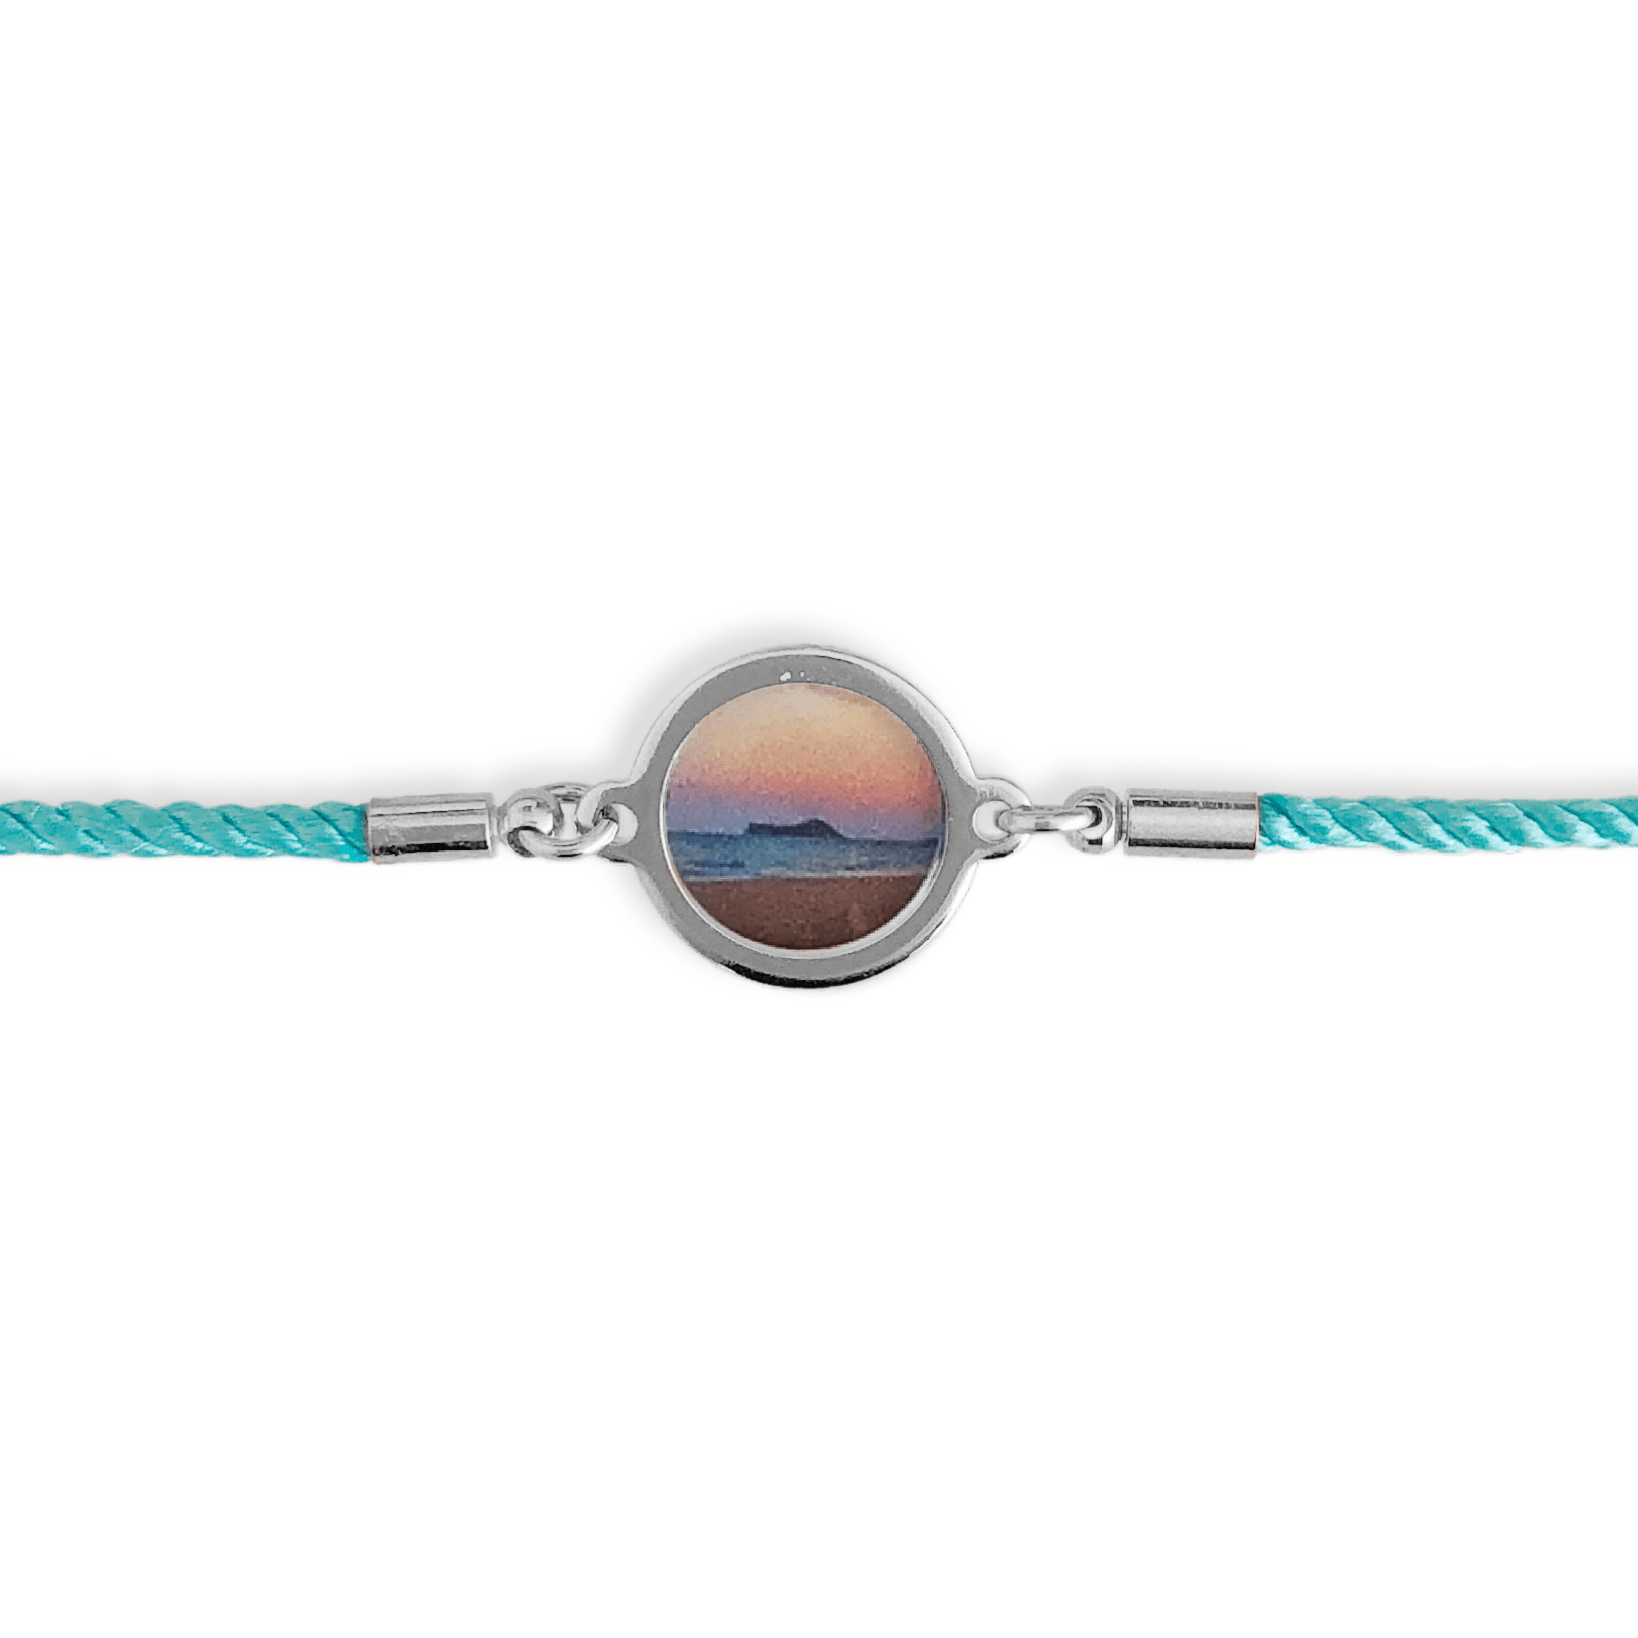 Oahu Sunset Bracelet featuring Rabbit Island